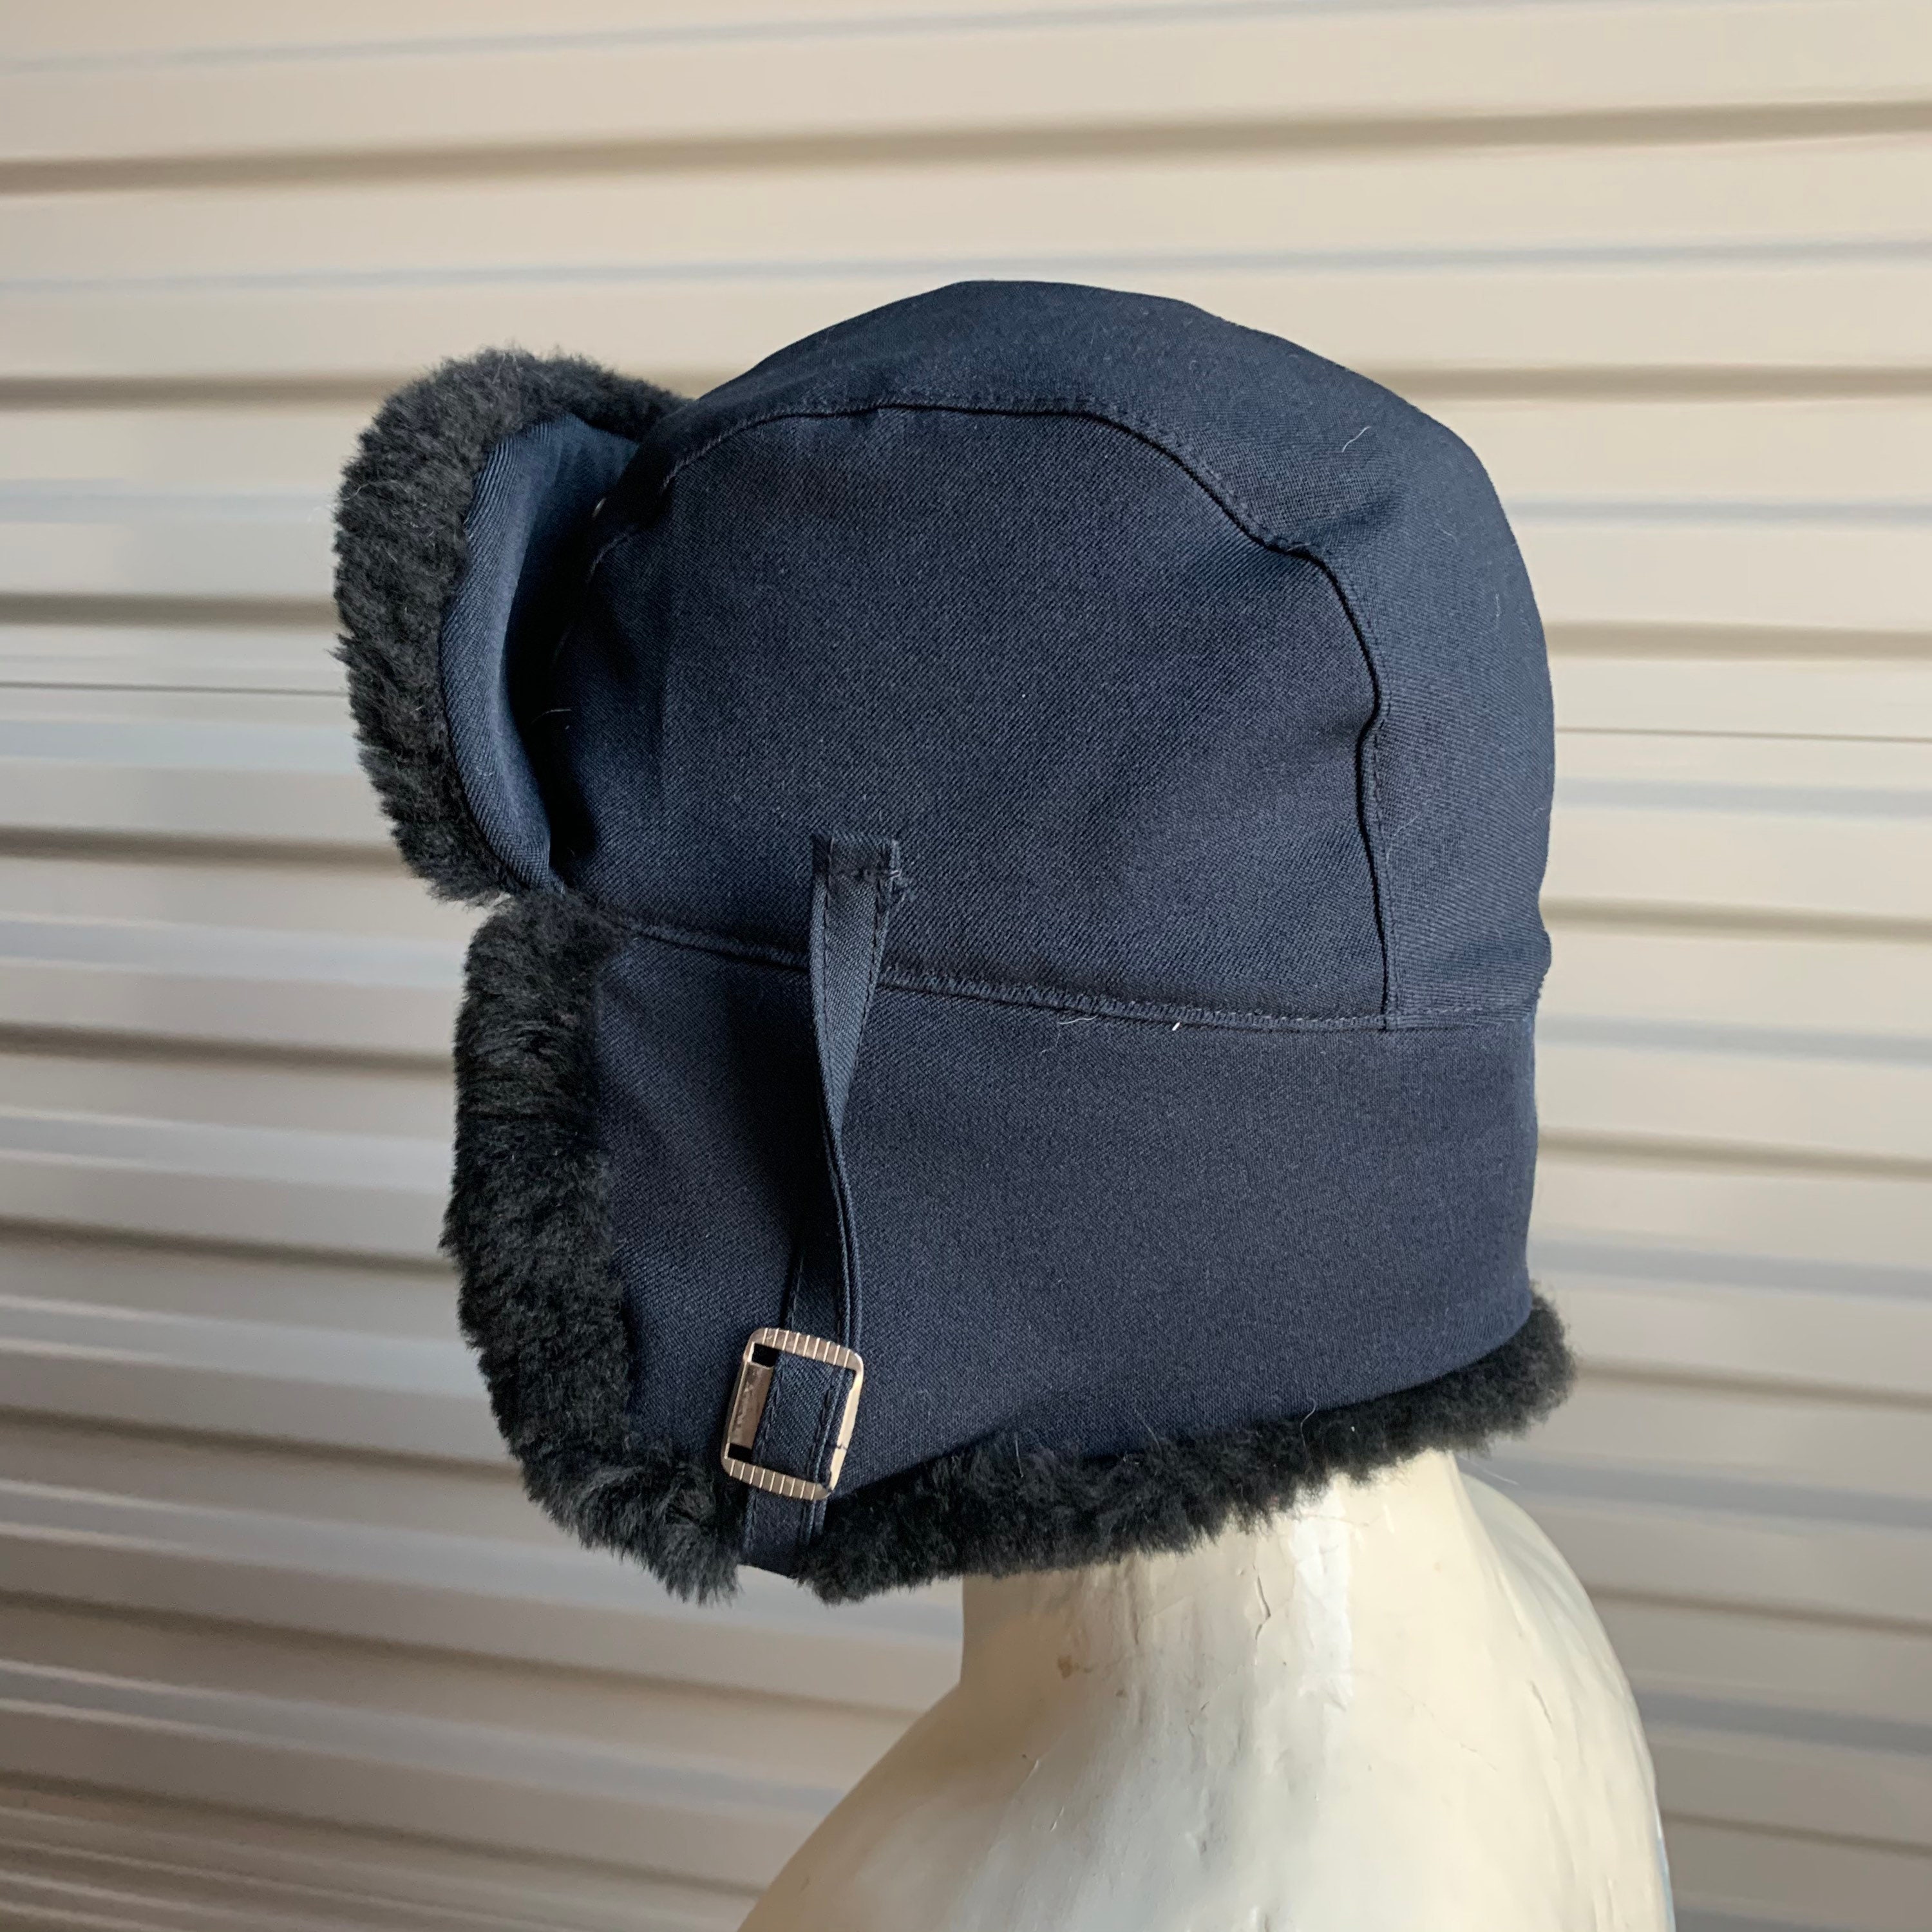 Vintage Trapper Hat Black Faux Fur and Navy Blue Fits | Etsy